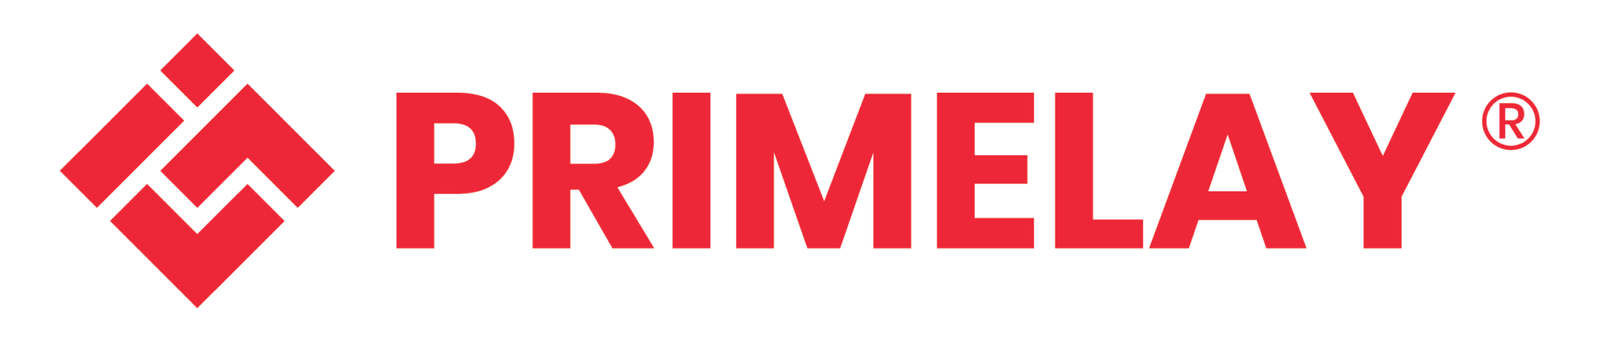 Primelay-Logo-single-color-WHITE-3-2048x438